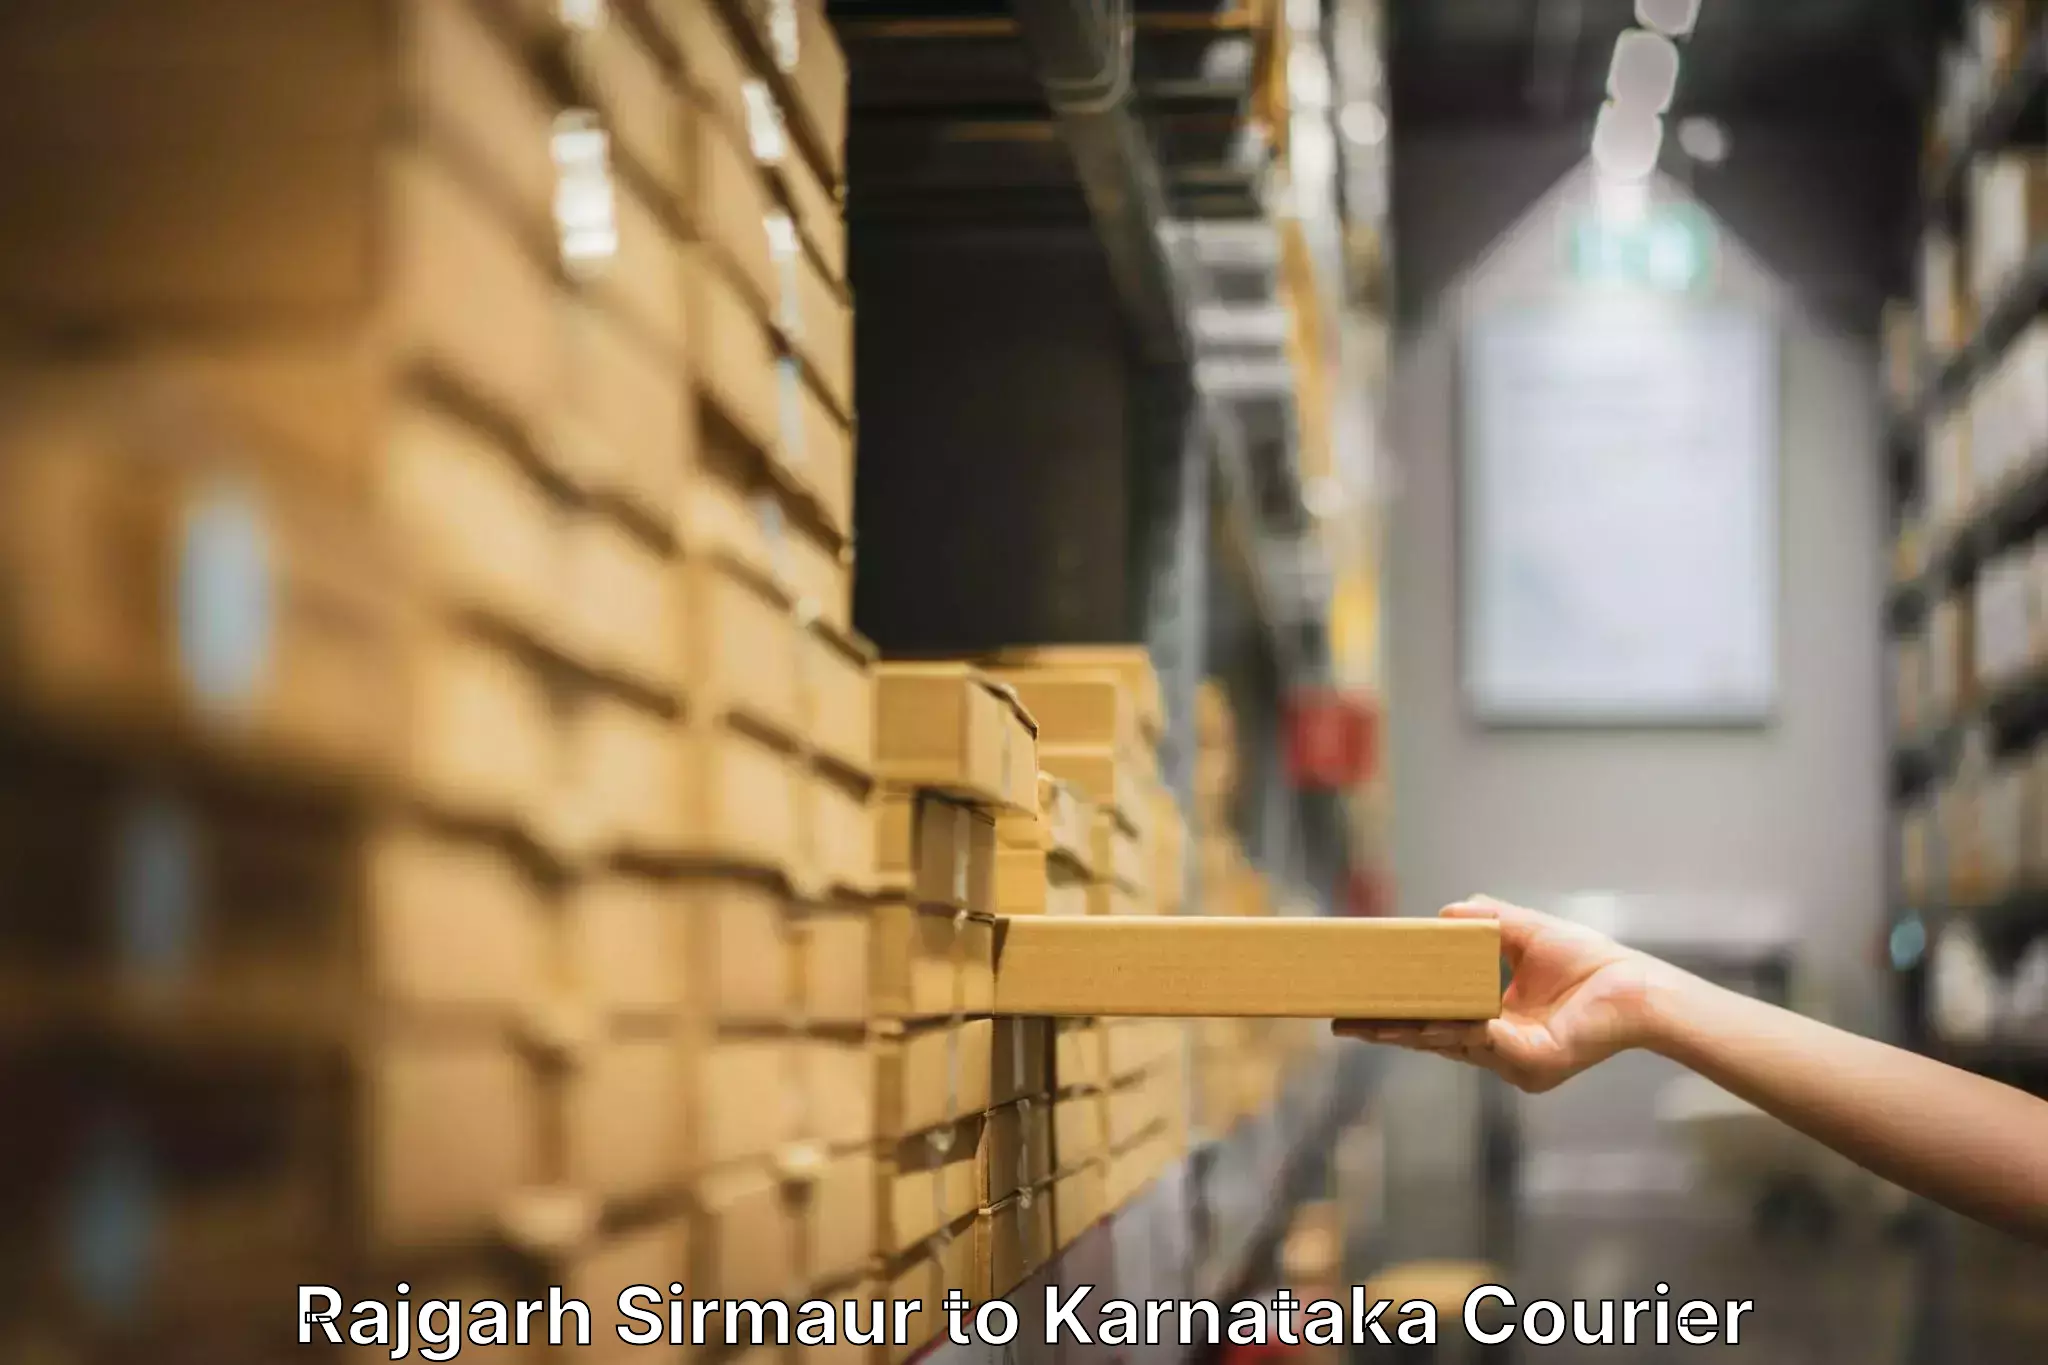 Home relocation experts Rajgarh Sirmaur to Karnataka